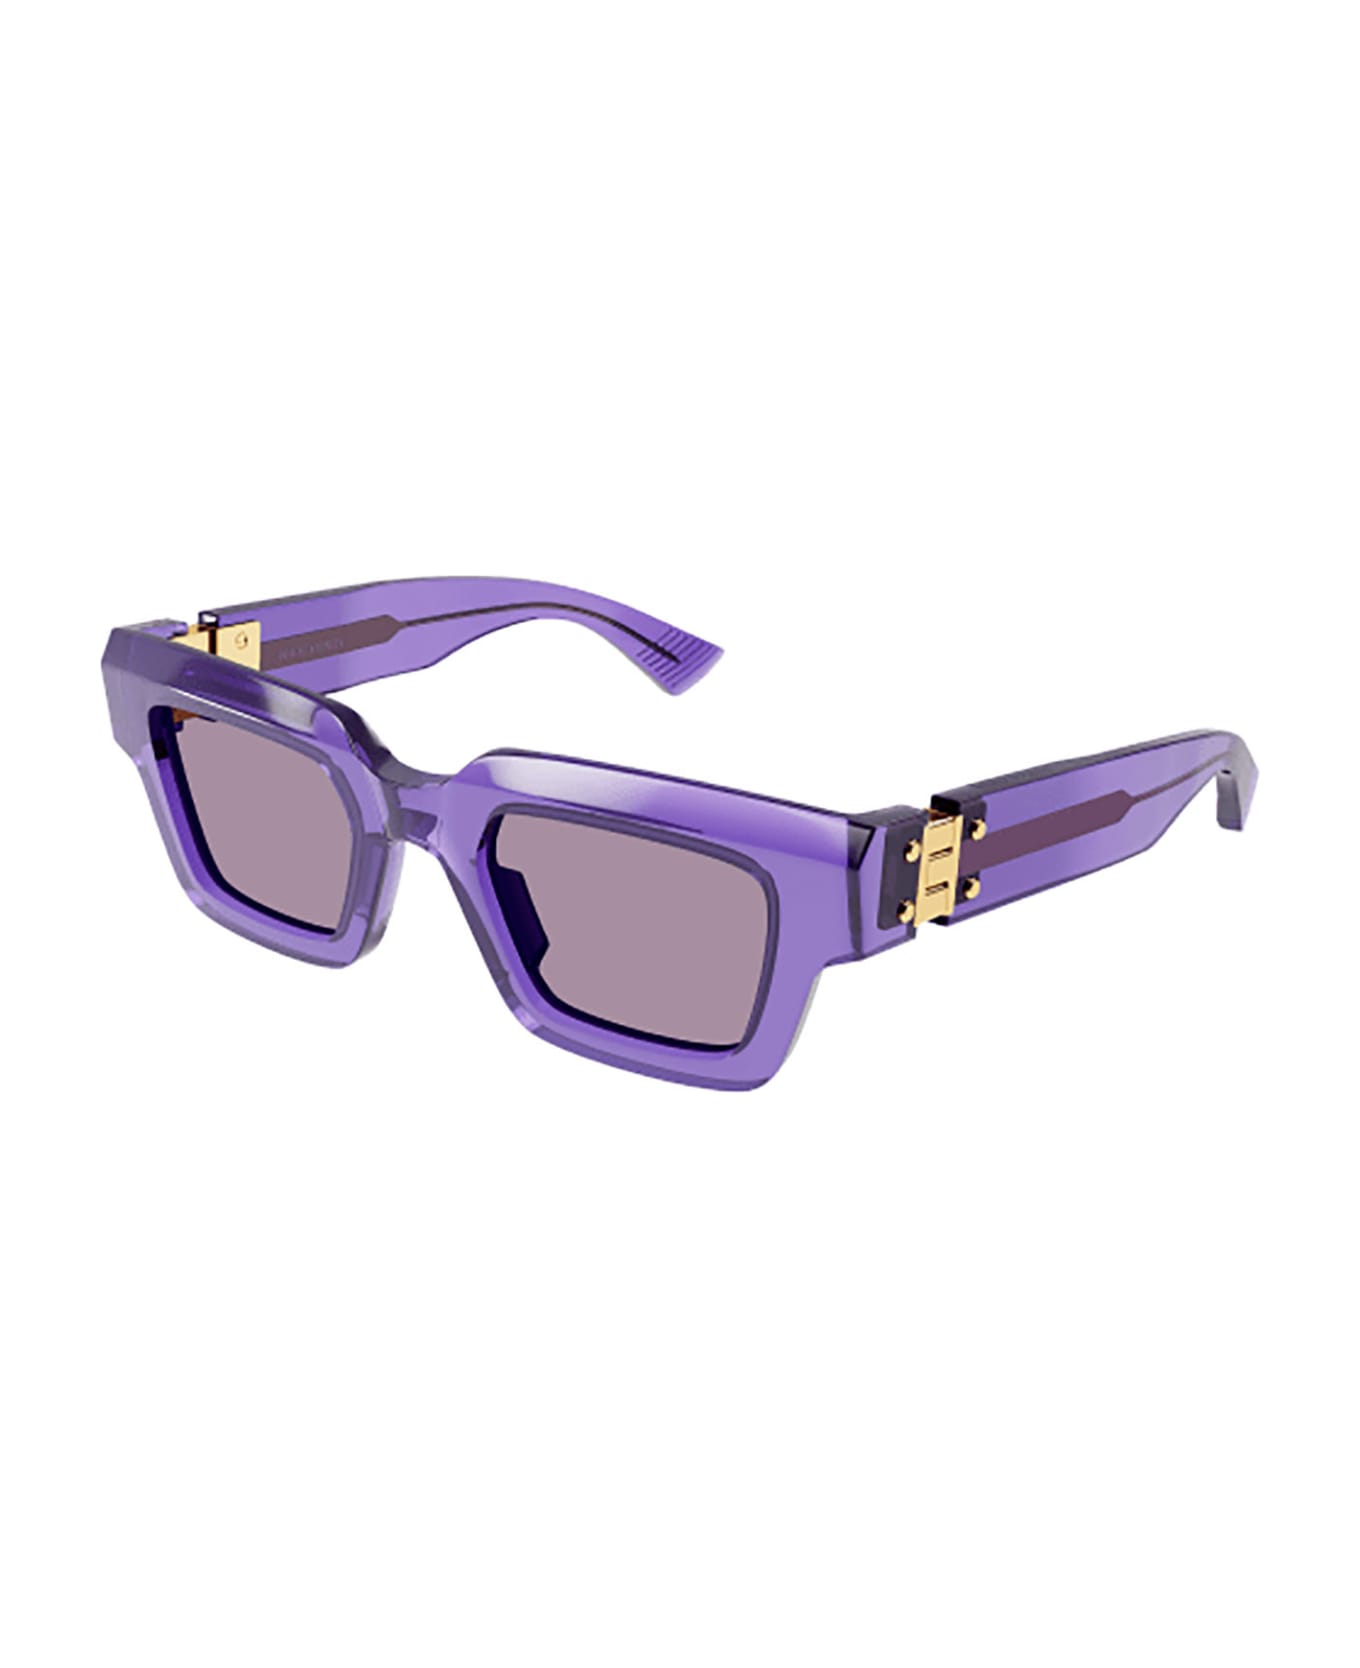 Bottega Veneta Eyewear 1g7r4ni0a - 003 violet violet violet